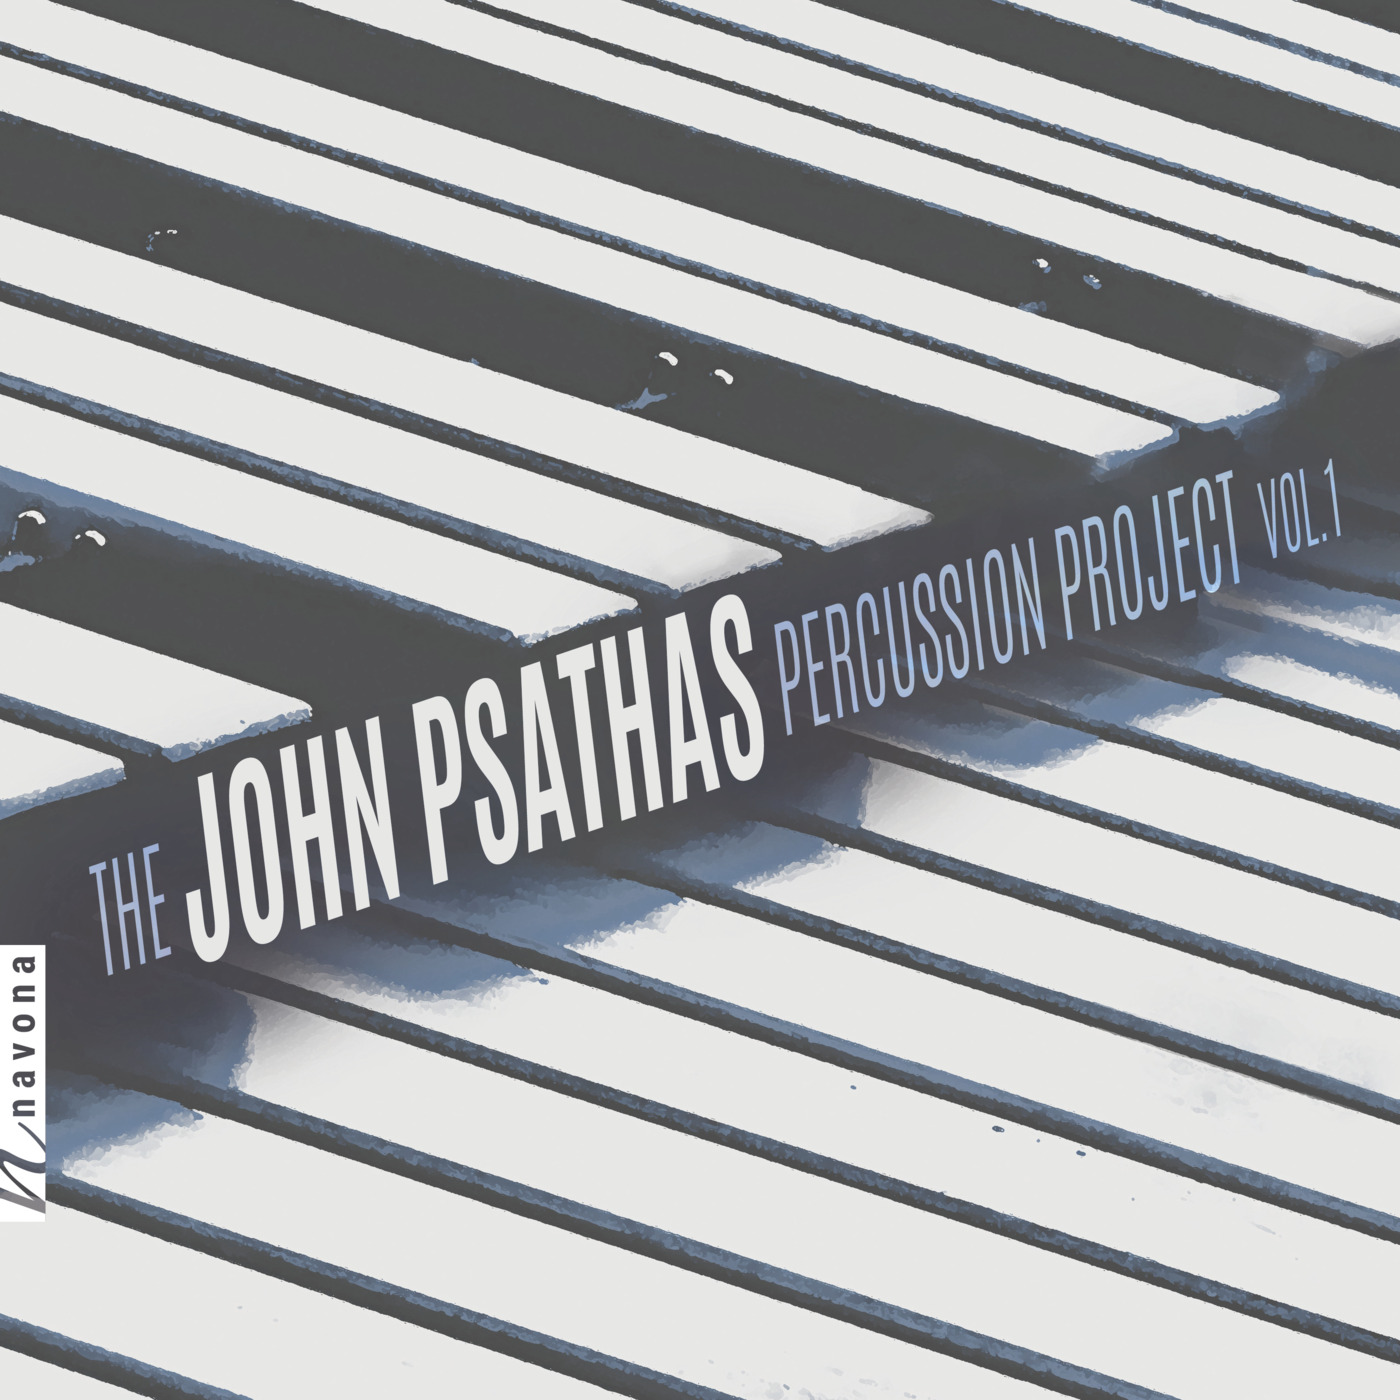 Episode 72: 15072 John Psathas Percussion Project: Vol 1